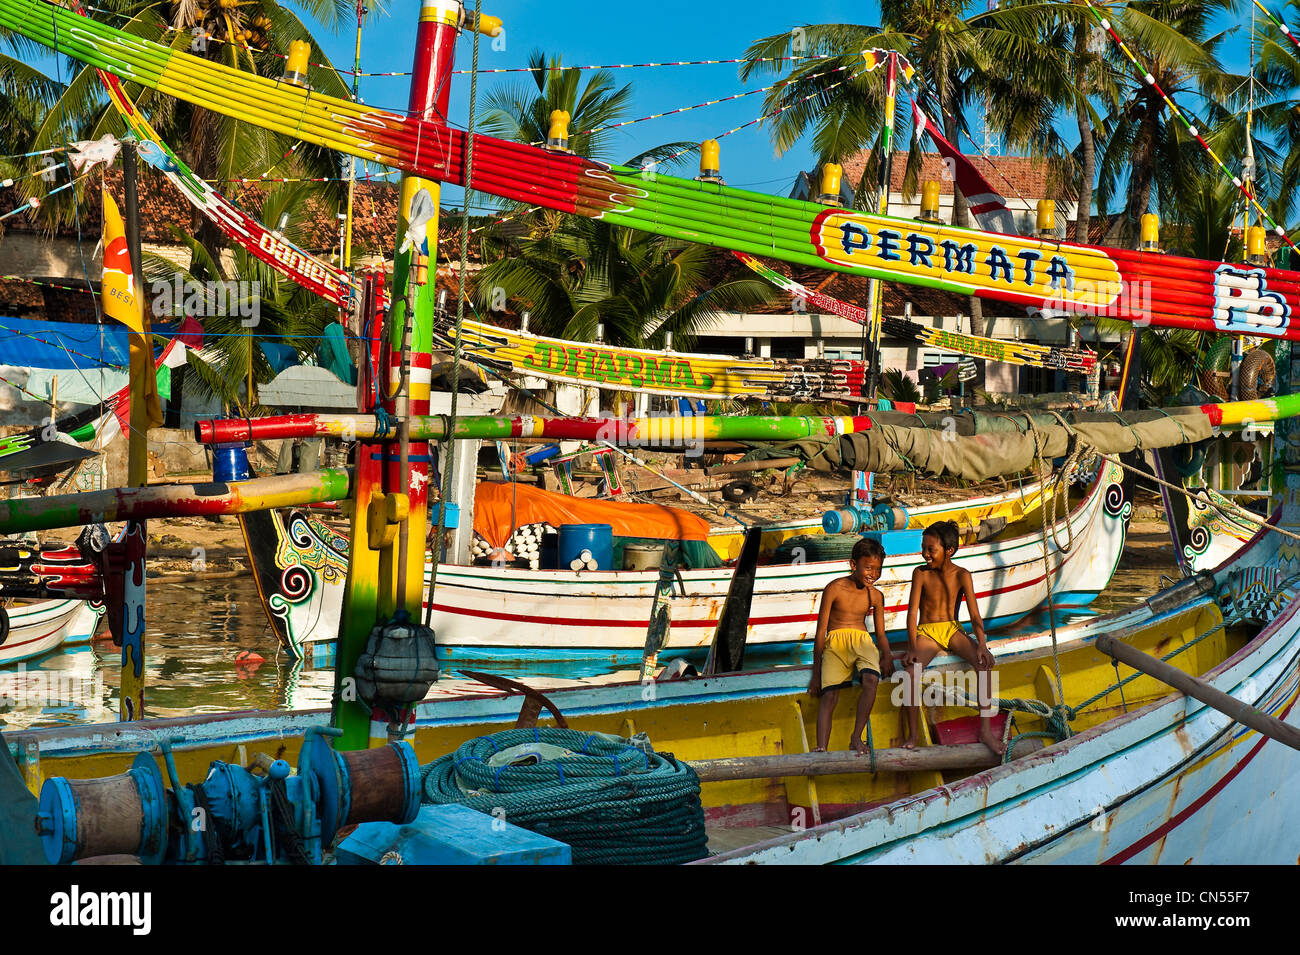 Indonesia, Java, East Java Province, Madura Island, Pasongsongan village, boats called Porsel Stock Photo